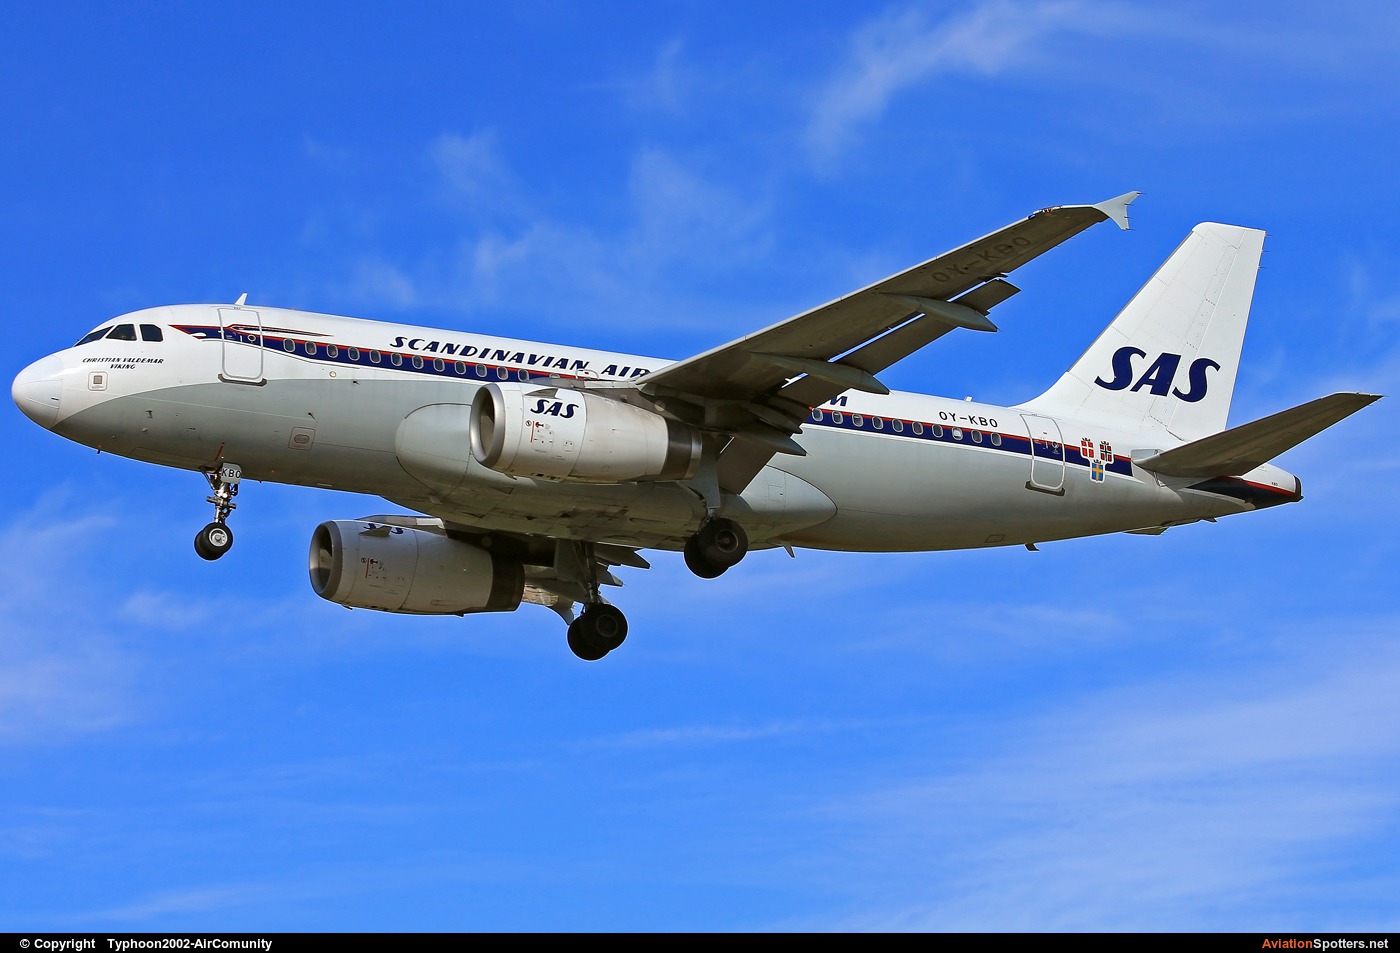 SAS - Scandinavian Airlines  -  A319  (OY-KBO) By Typhoon2002-AirComunity (AirComunity)